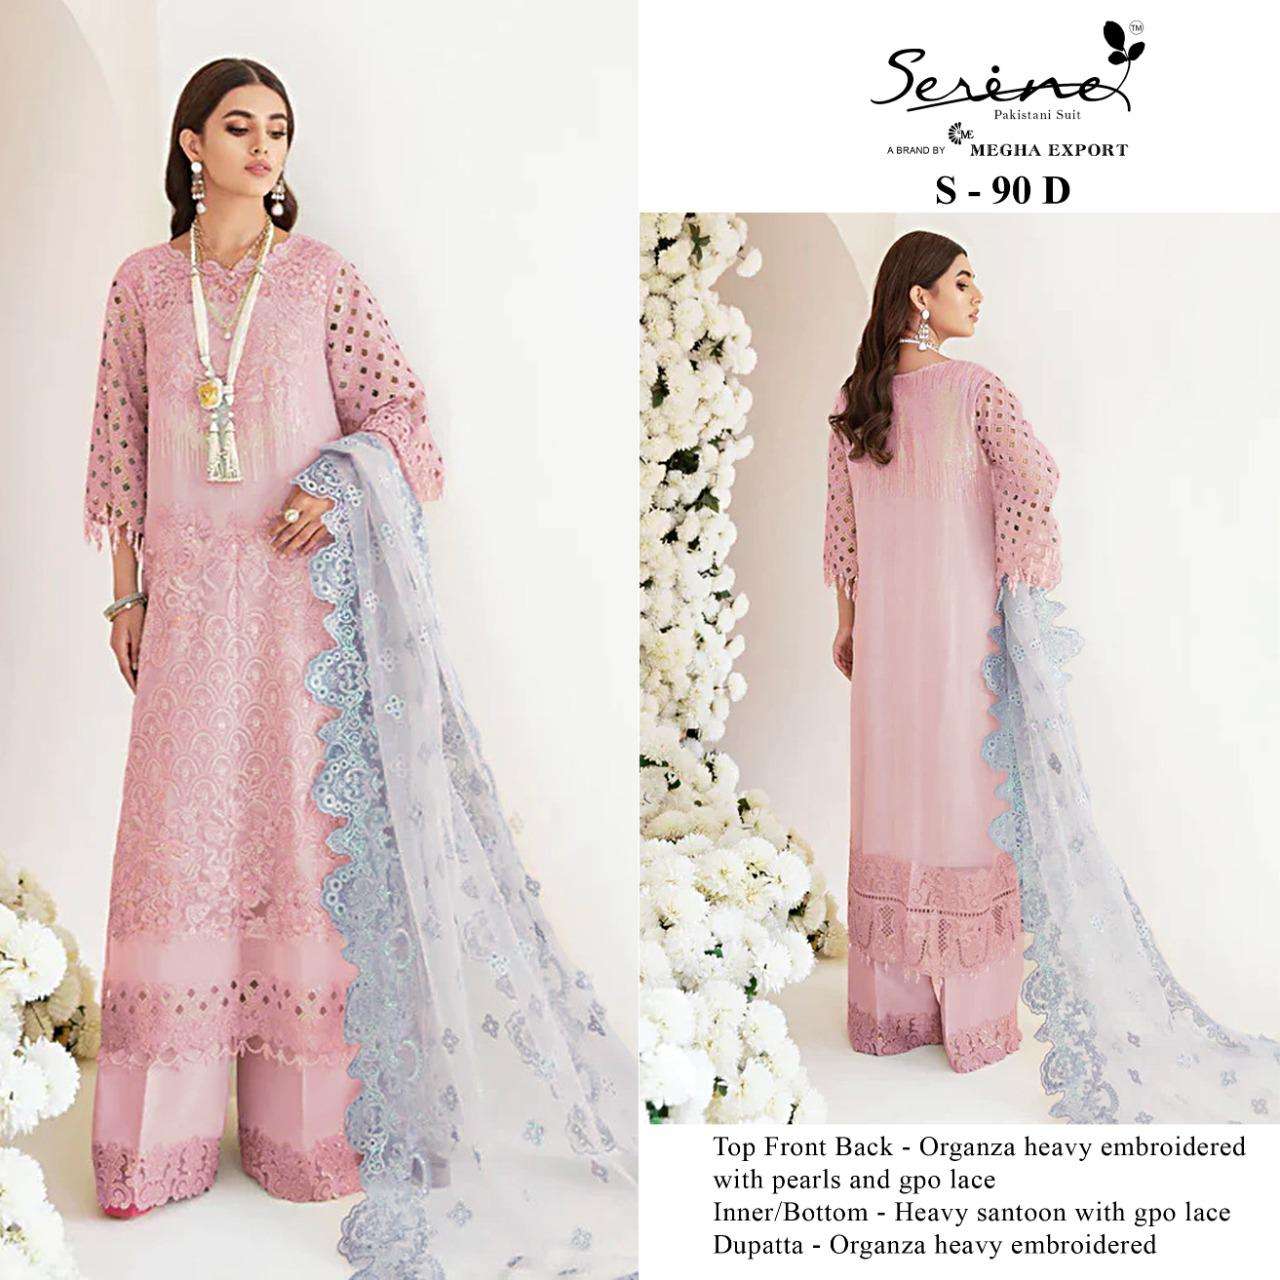 megha exports s 90 classy look organza embroidery pakistani dresses